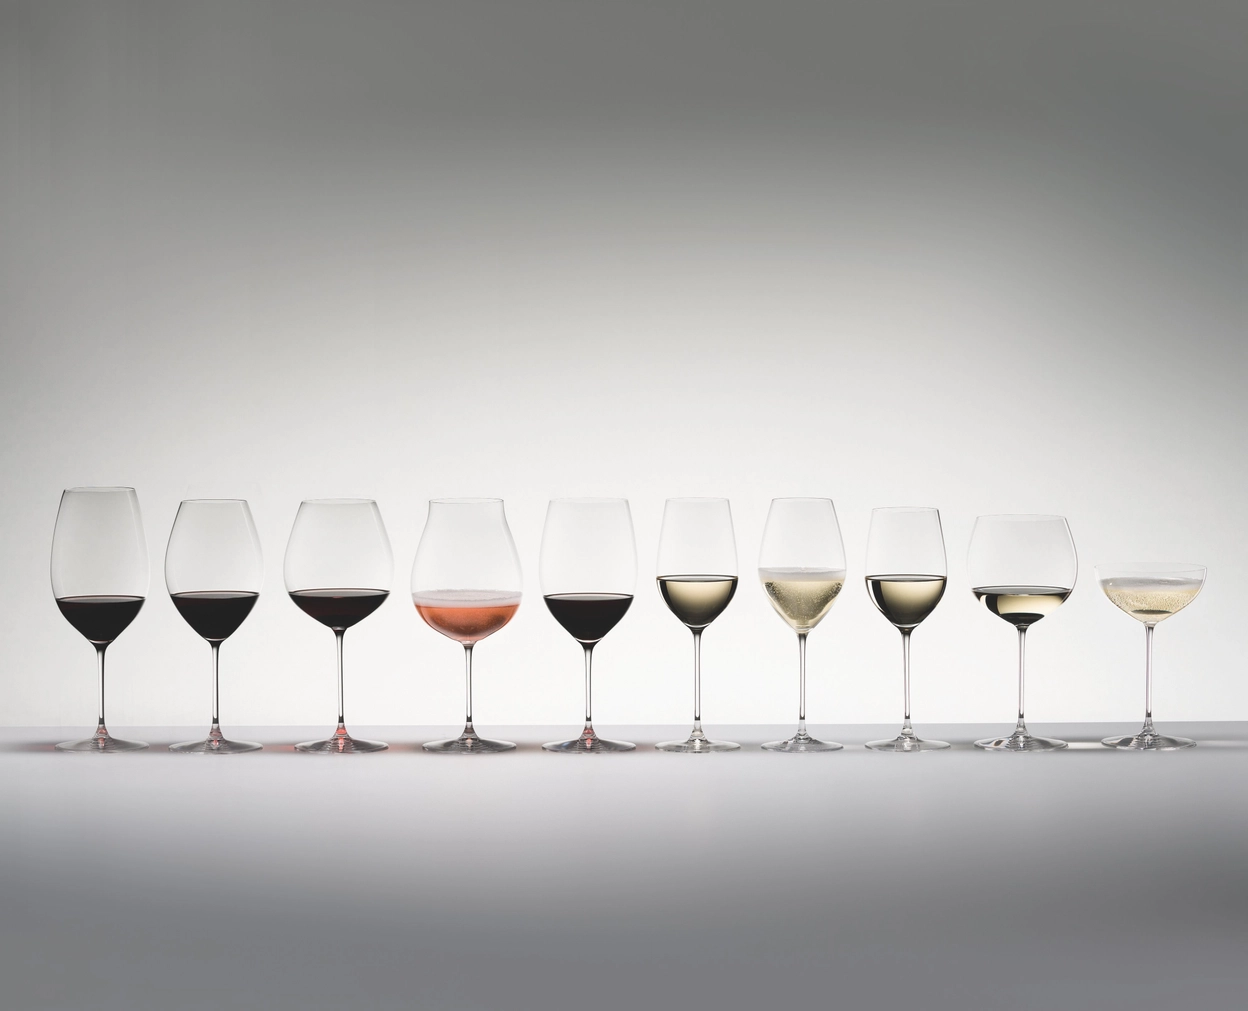 Riedel Veritas Cabernet-Merlot 2 red wine glasses